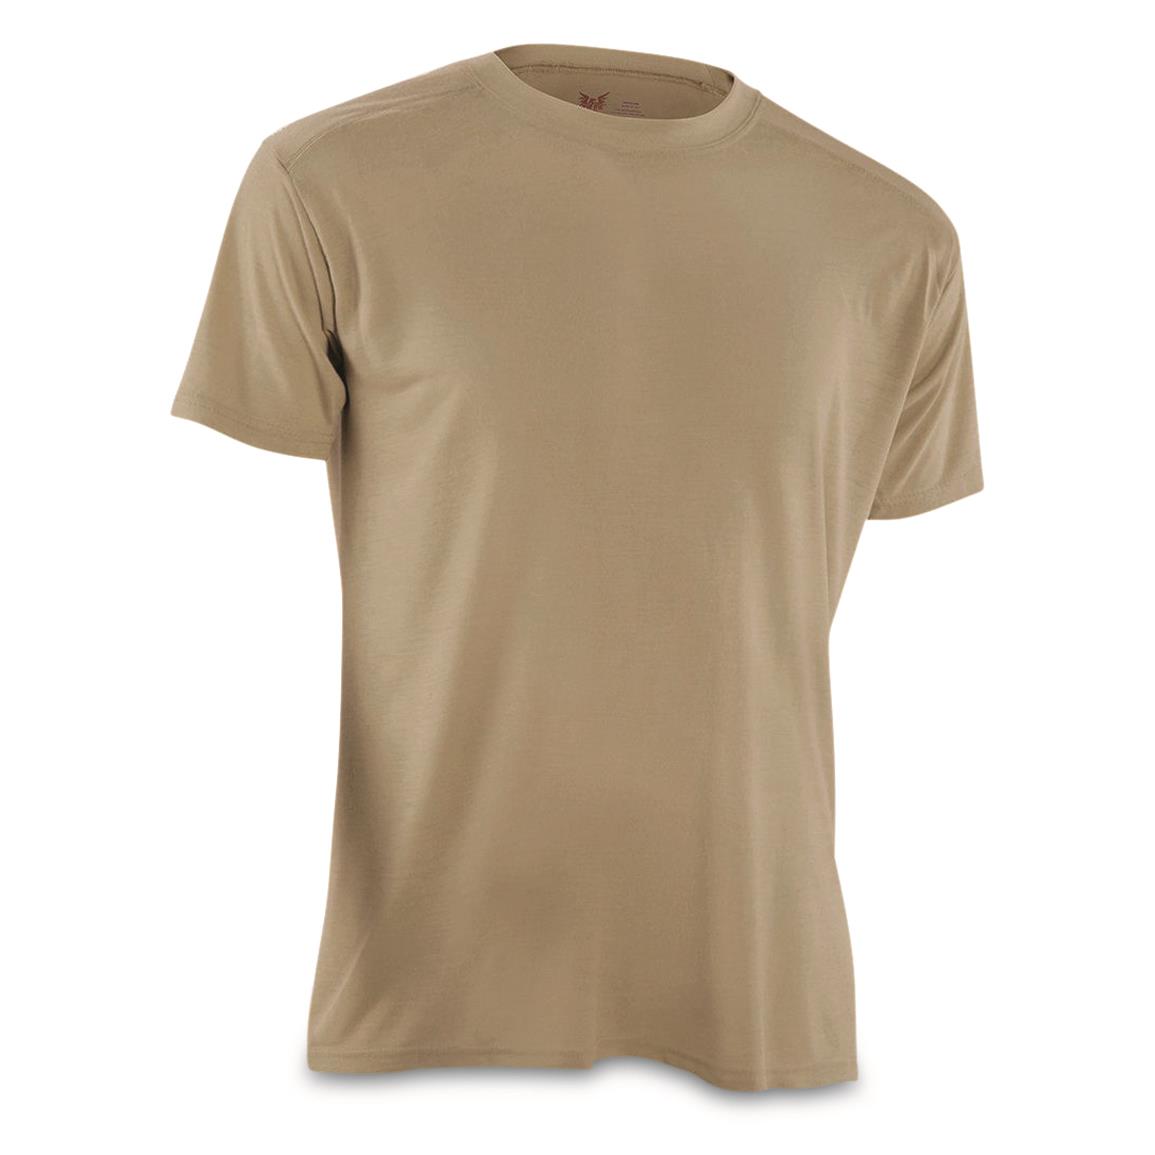 U.S. Military Surplus DRIFIRE Ultra Lightweight Base Layer Short Sleeve Shirt, New, Desert Sand